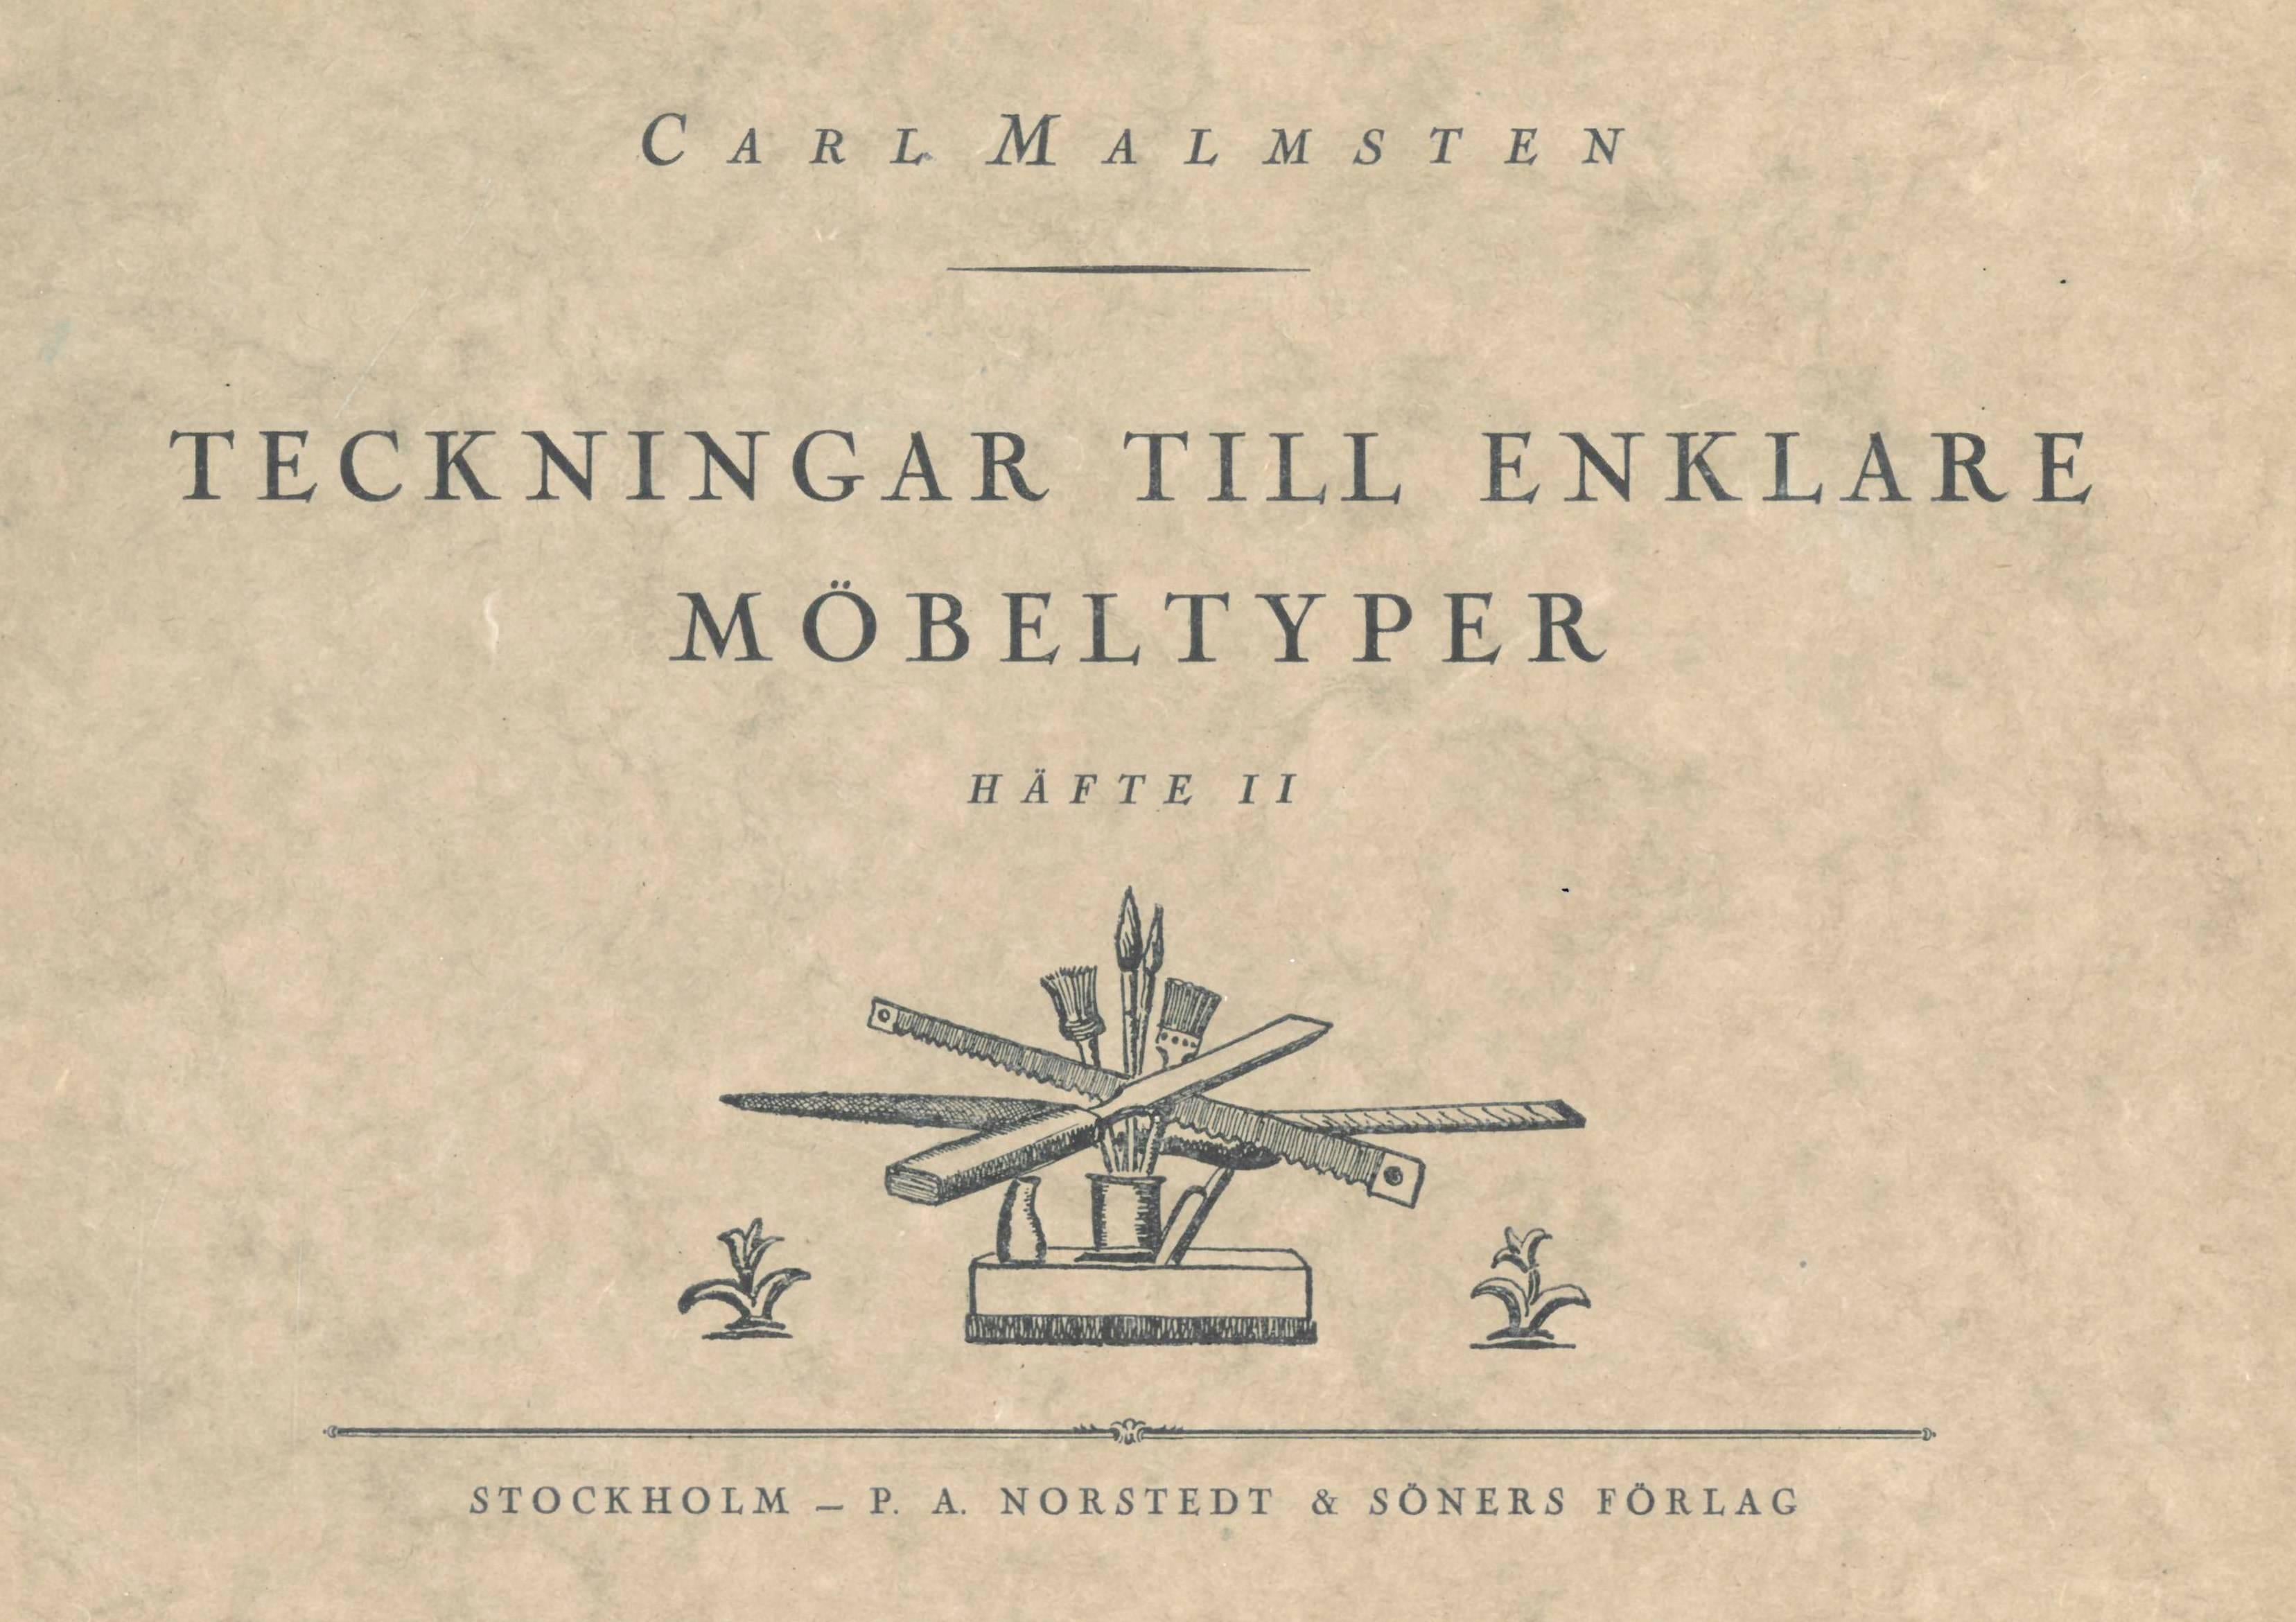 Paper Teckningar Till Enklare Mobeltyper by Carl Malmsten 2 Volumes (Book) For Sale